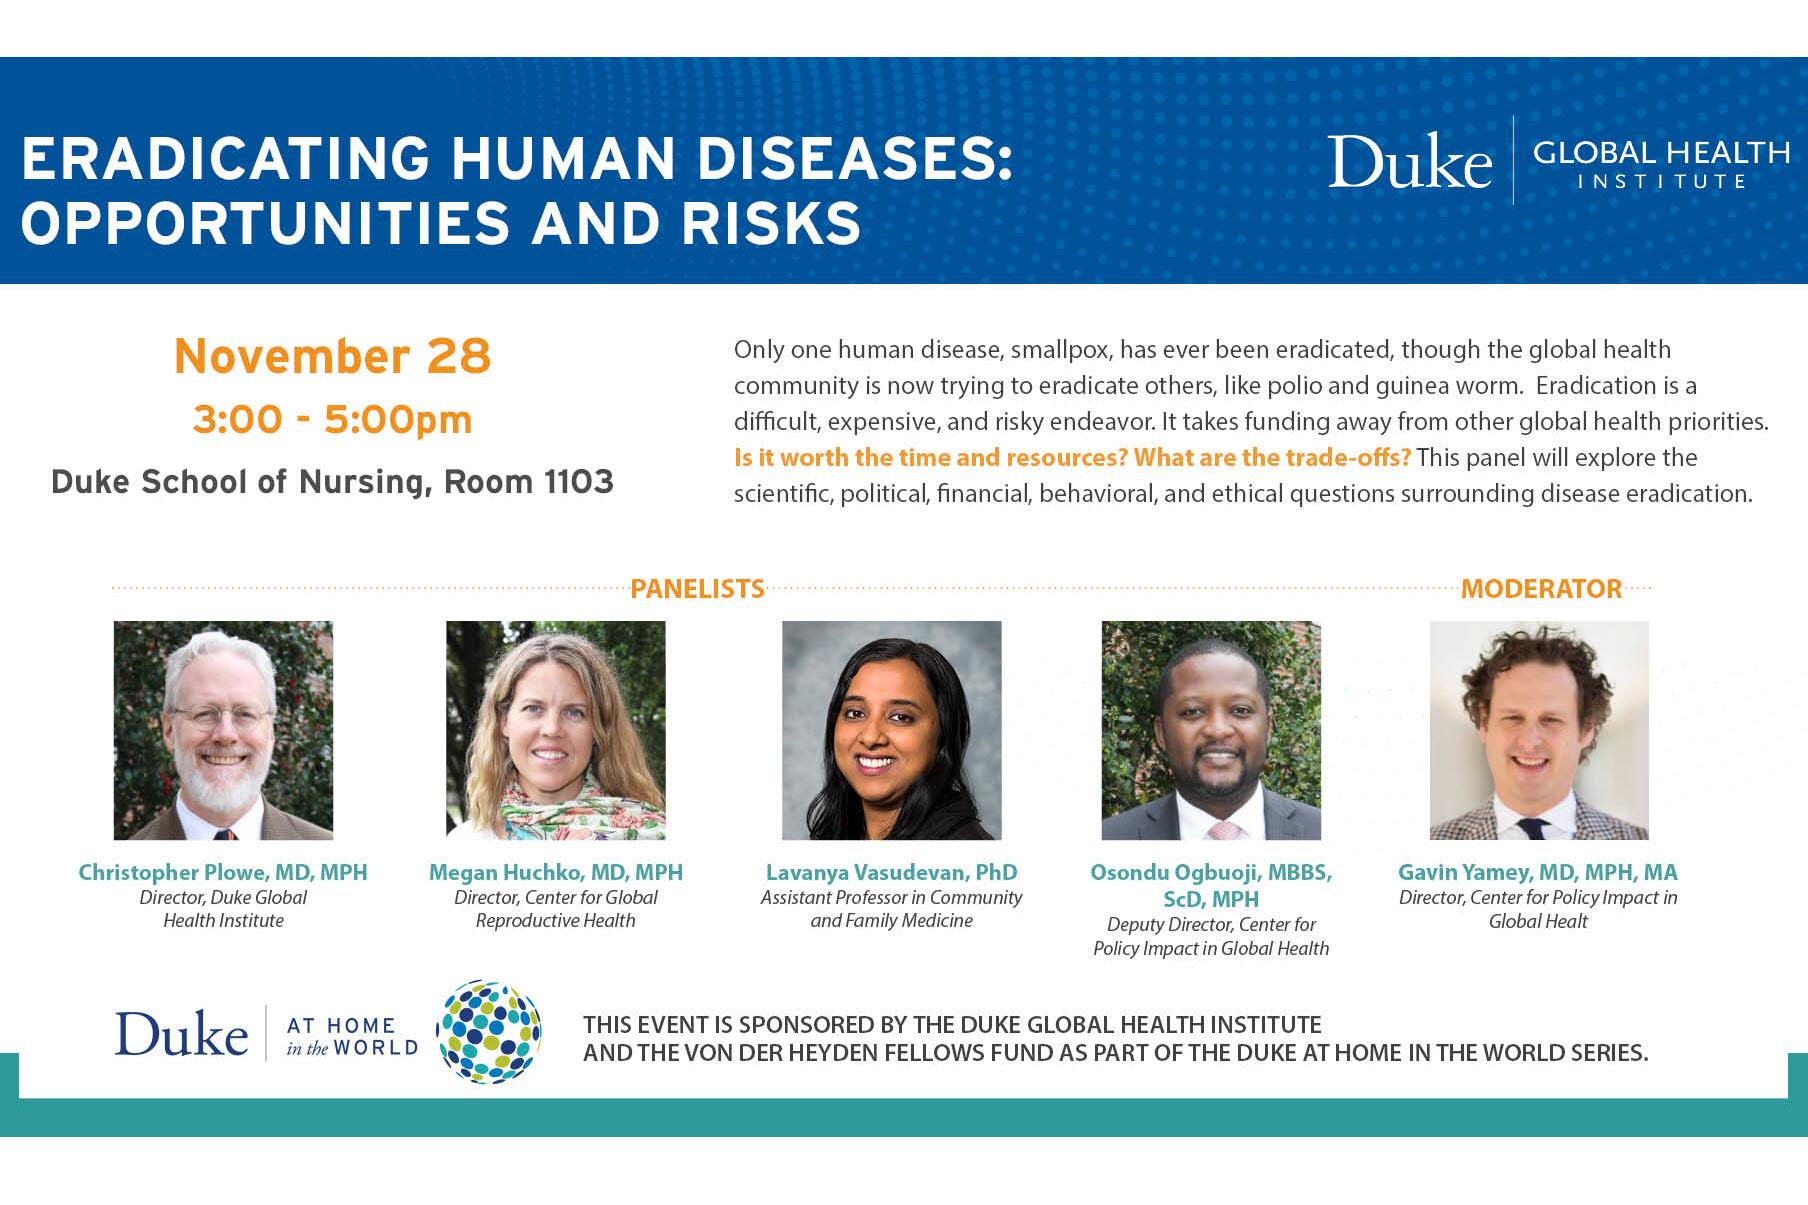 Duke Global Health Institute; Eradicating Human Diseases: Opportunities and Risks